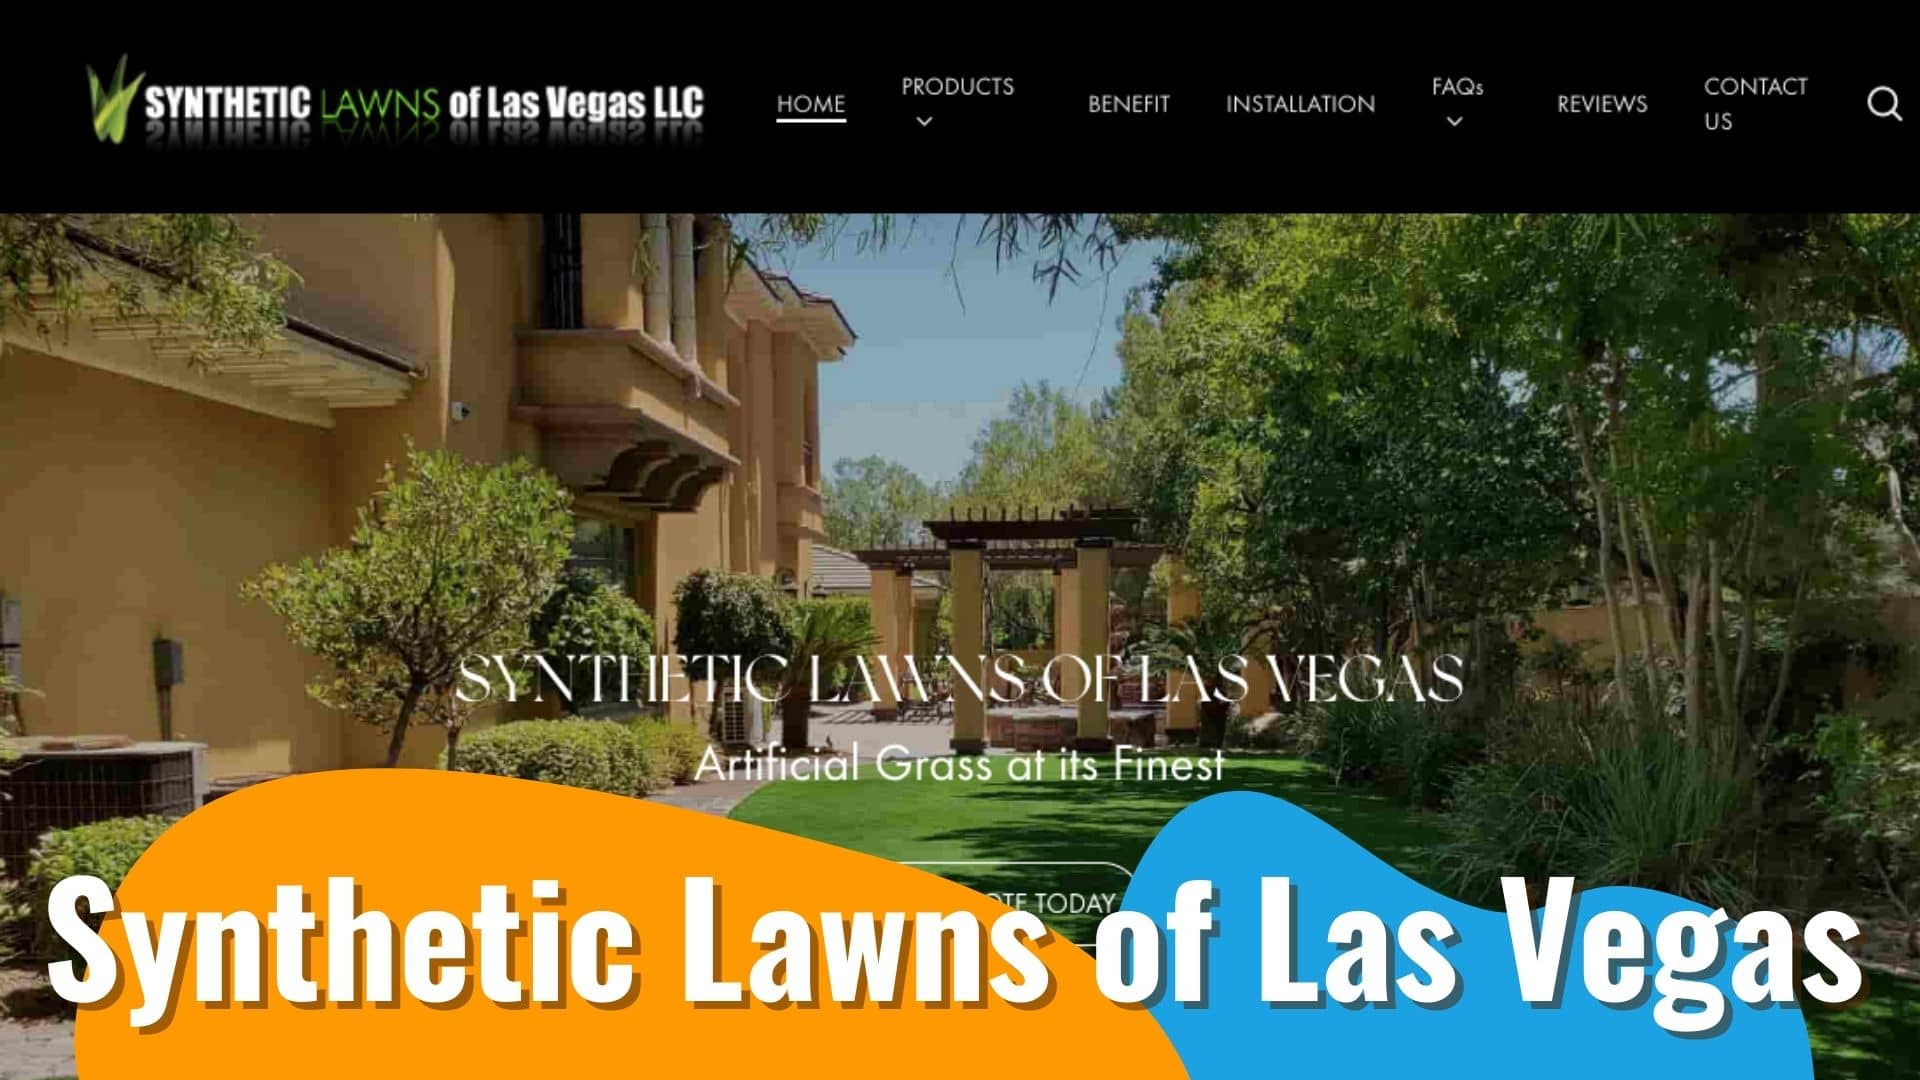 Synthetic Lawns of Las Vegas